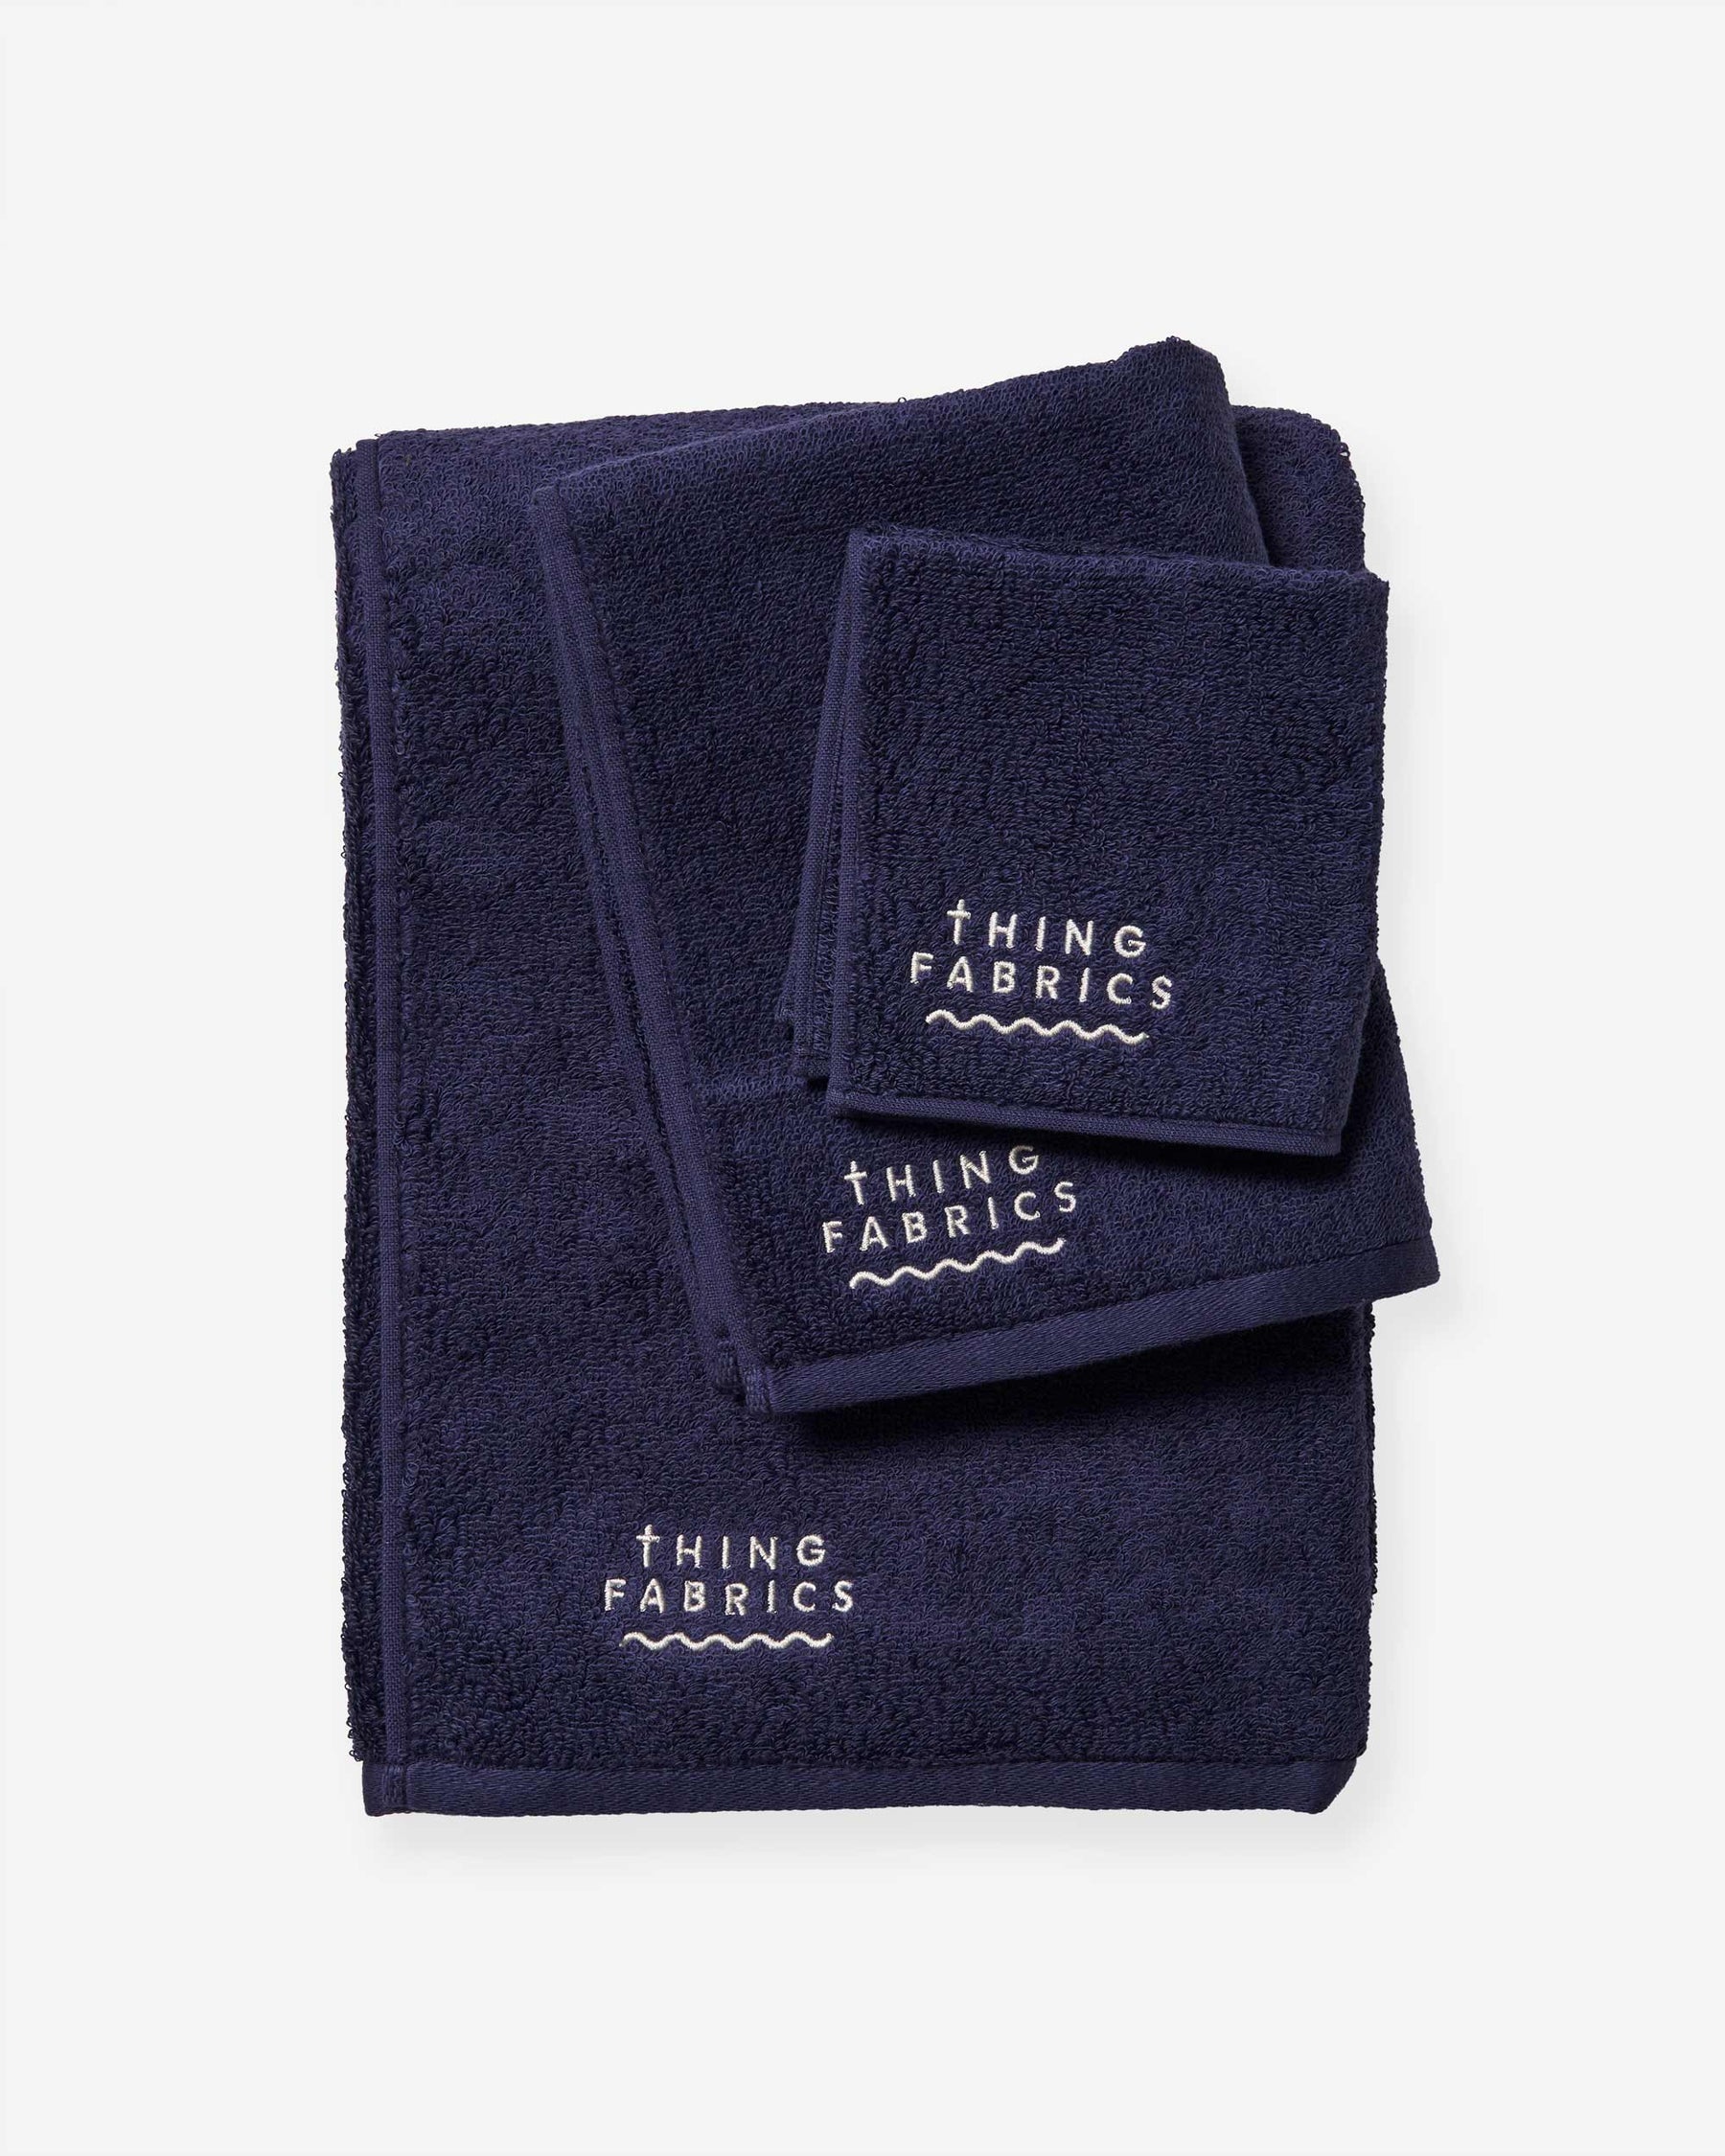 TIP TOP 365 Towel Gift Box - Navy